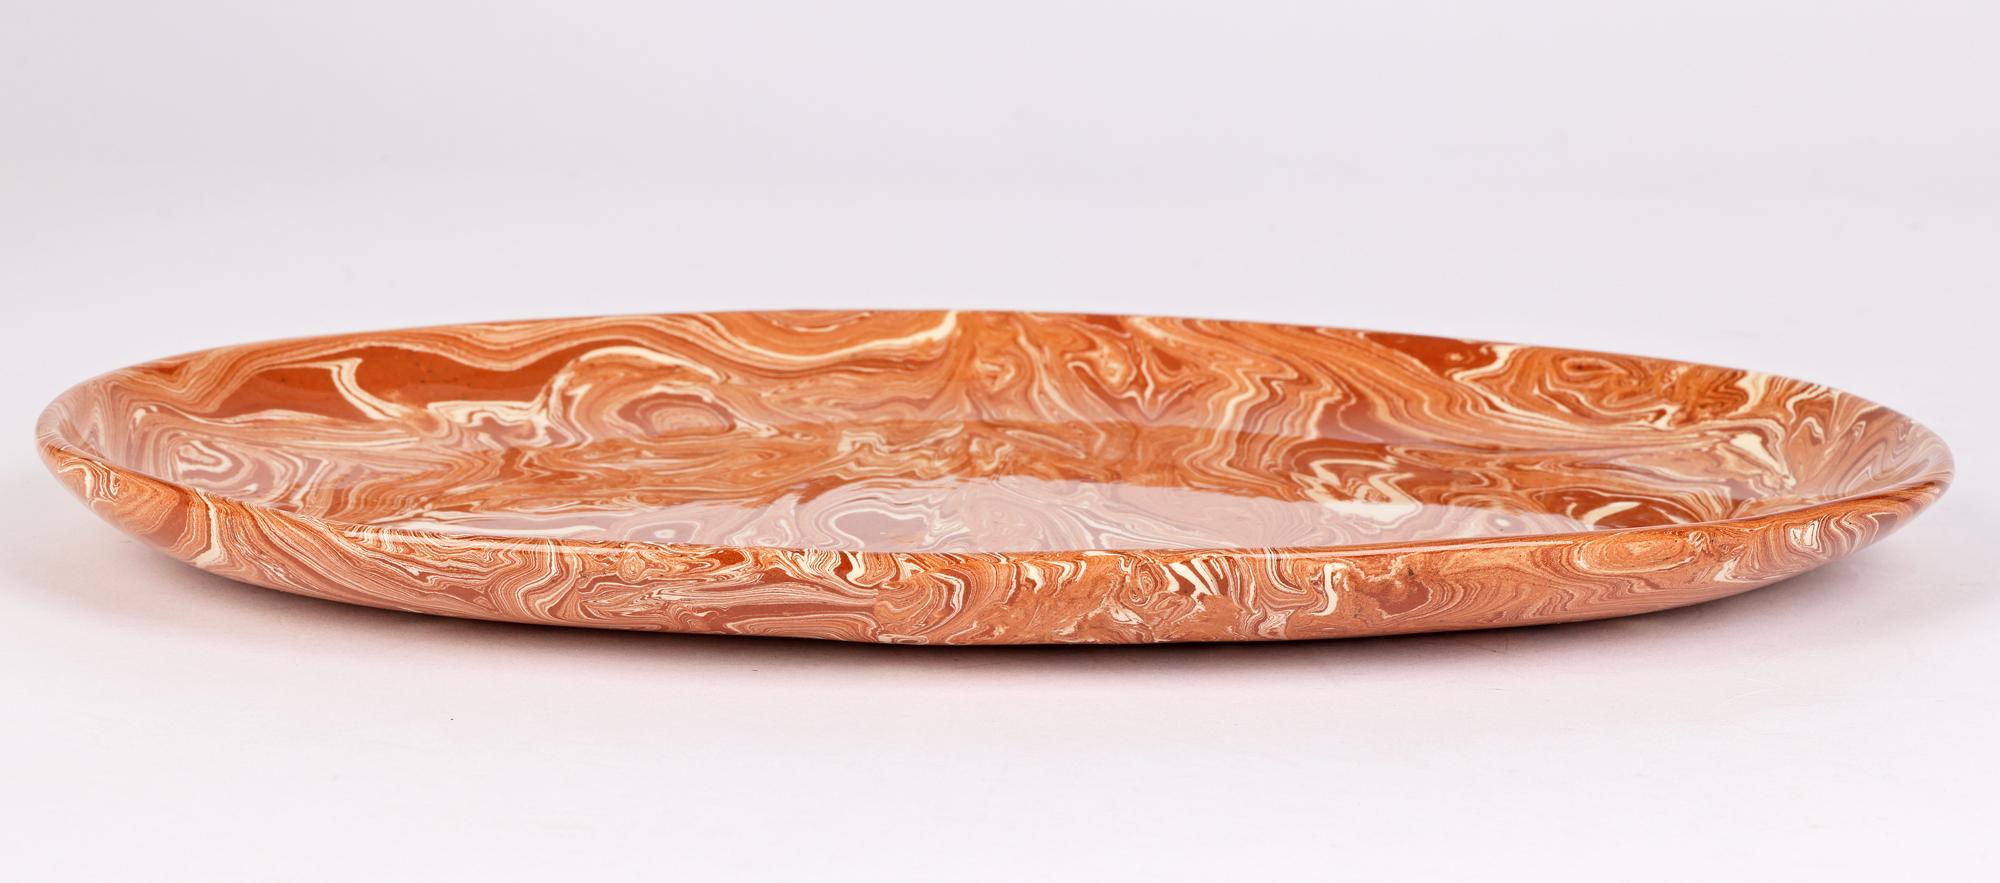 Unusual Marble Patterned Slip Glazed Terracotta Serving Dish 1